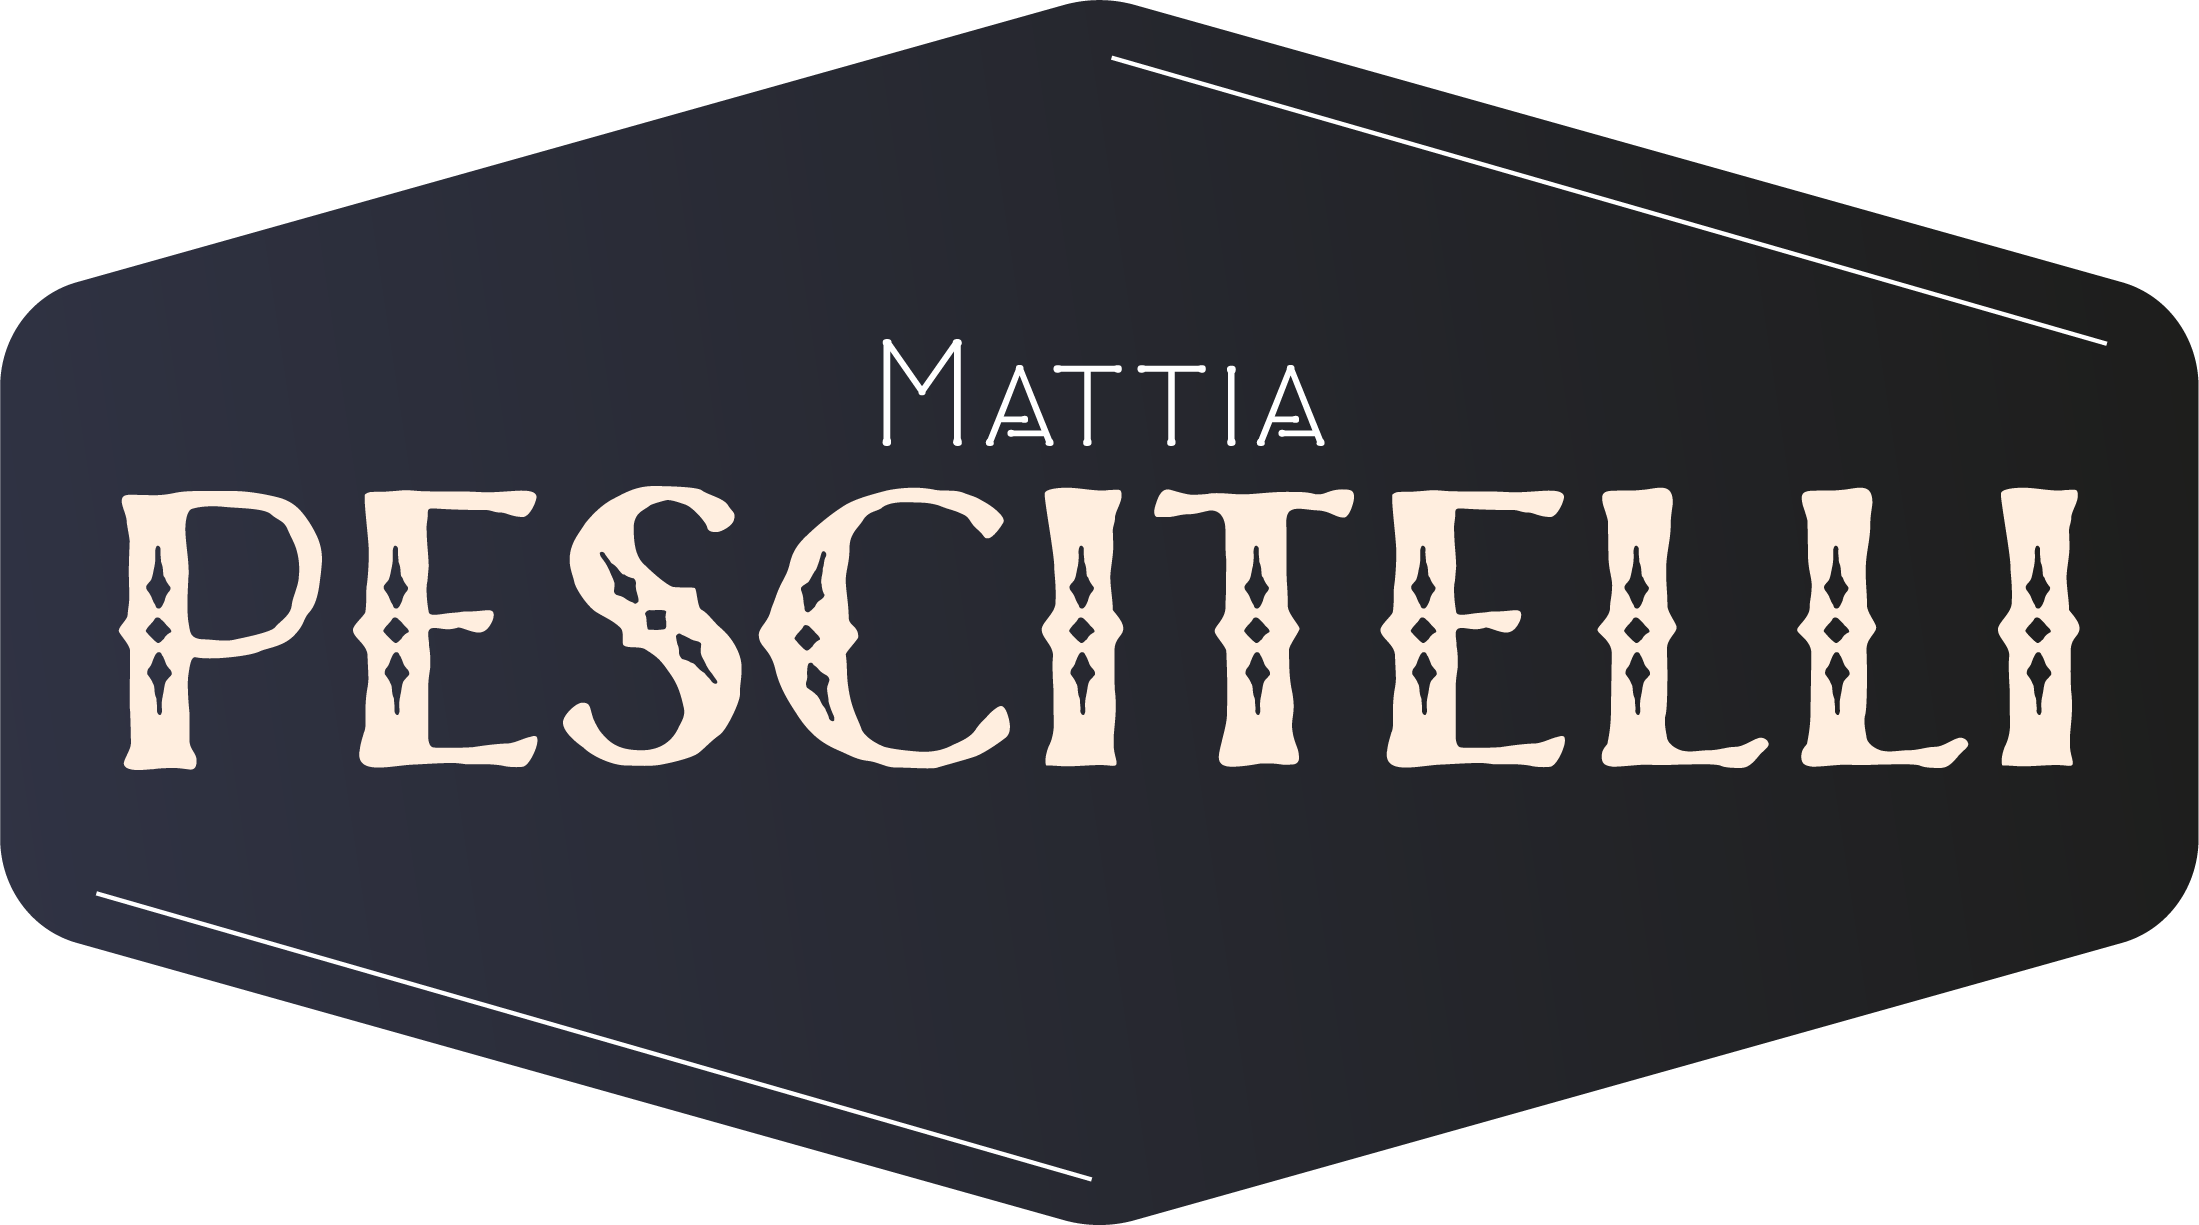 Mattia Pescitelli